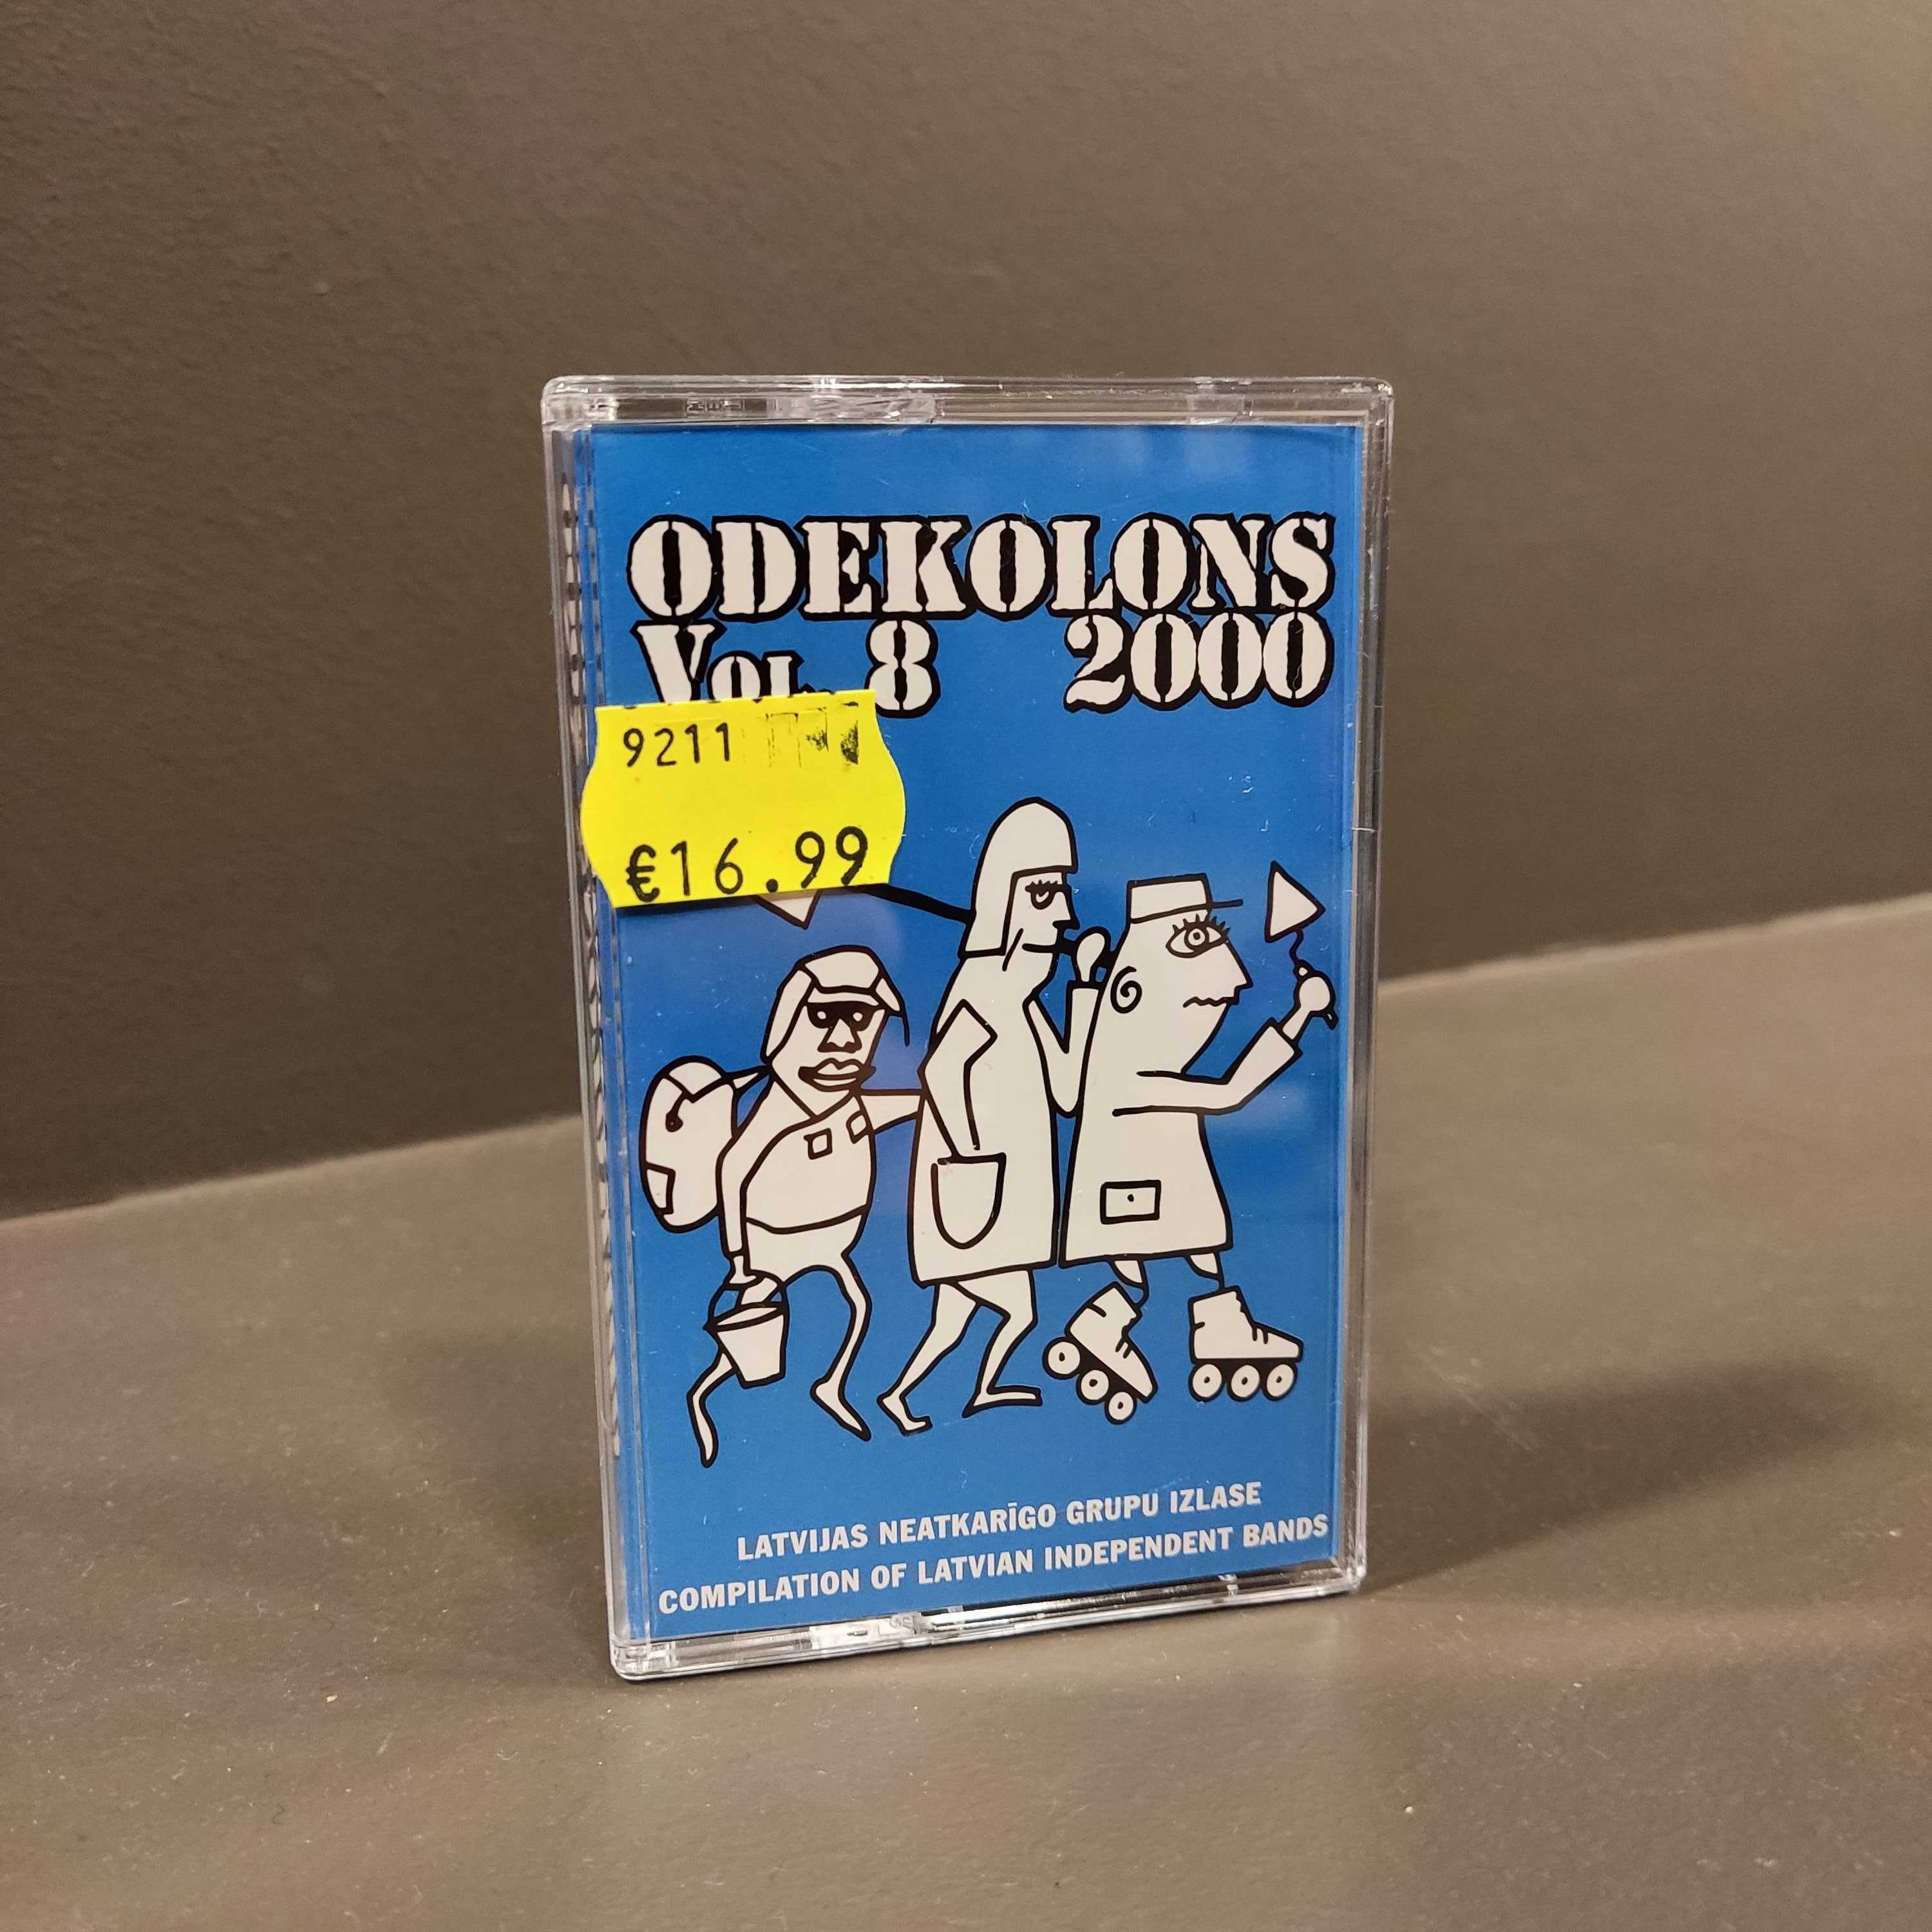 Various - Odekolons Vol. 8 2000